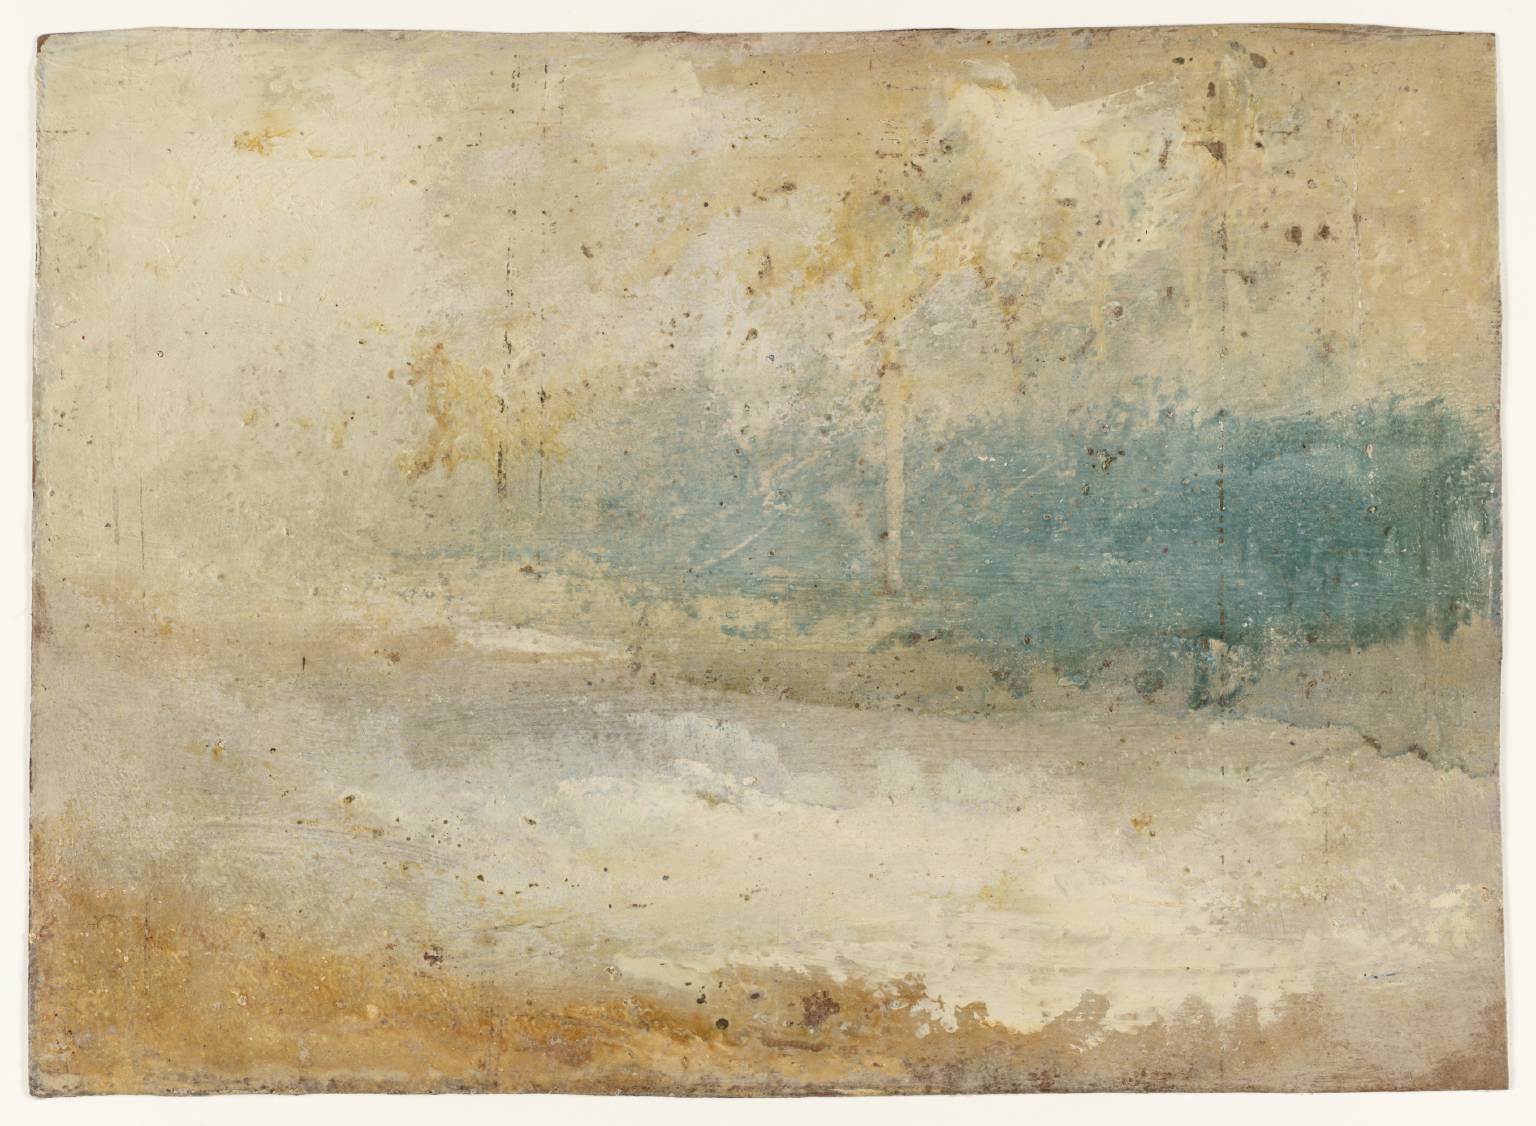 Waves Breaking on a Beach (1845).